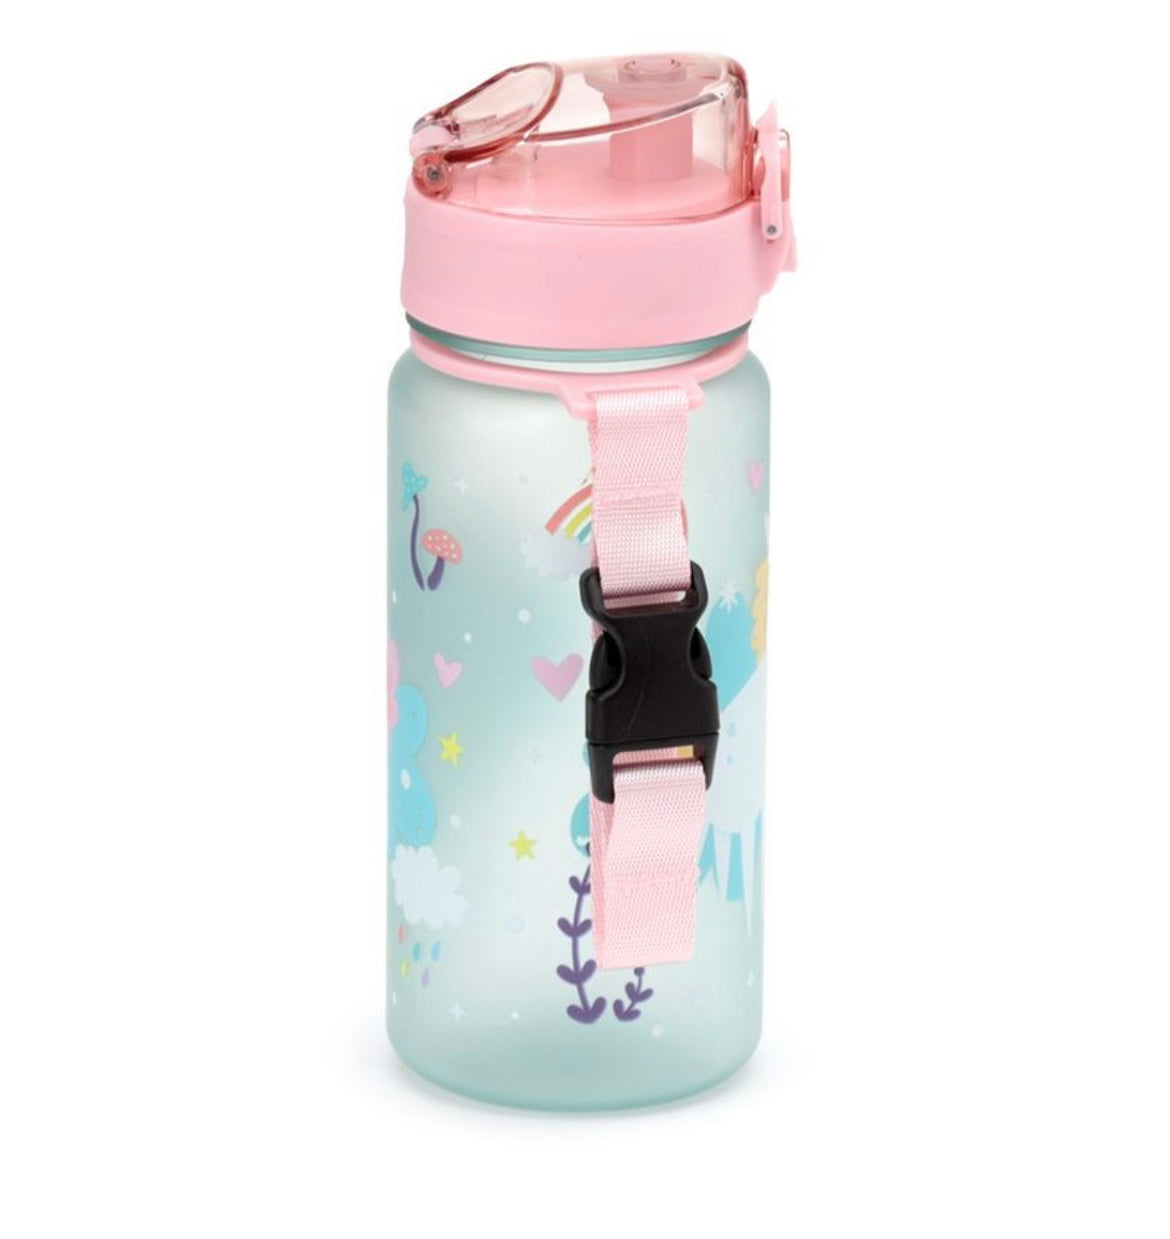 Unicorn Magic Pop Top 350ml Shatterproof Children's Water Bottle